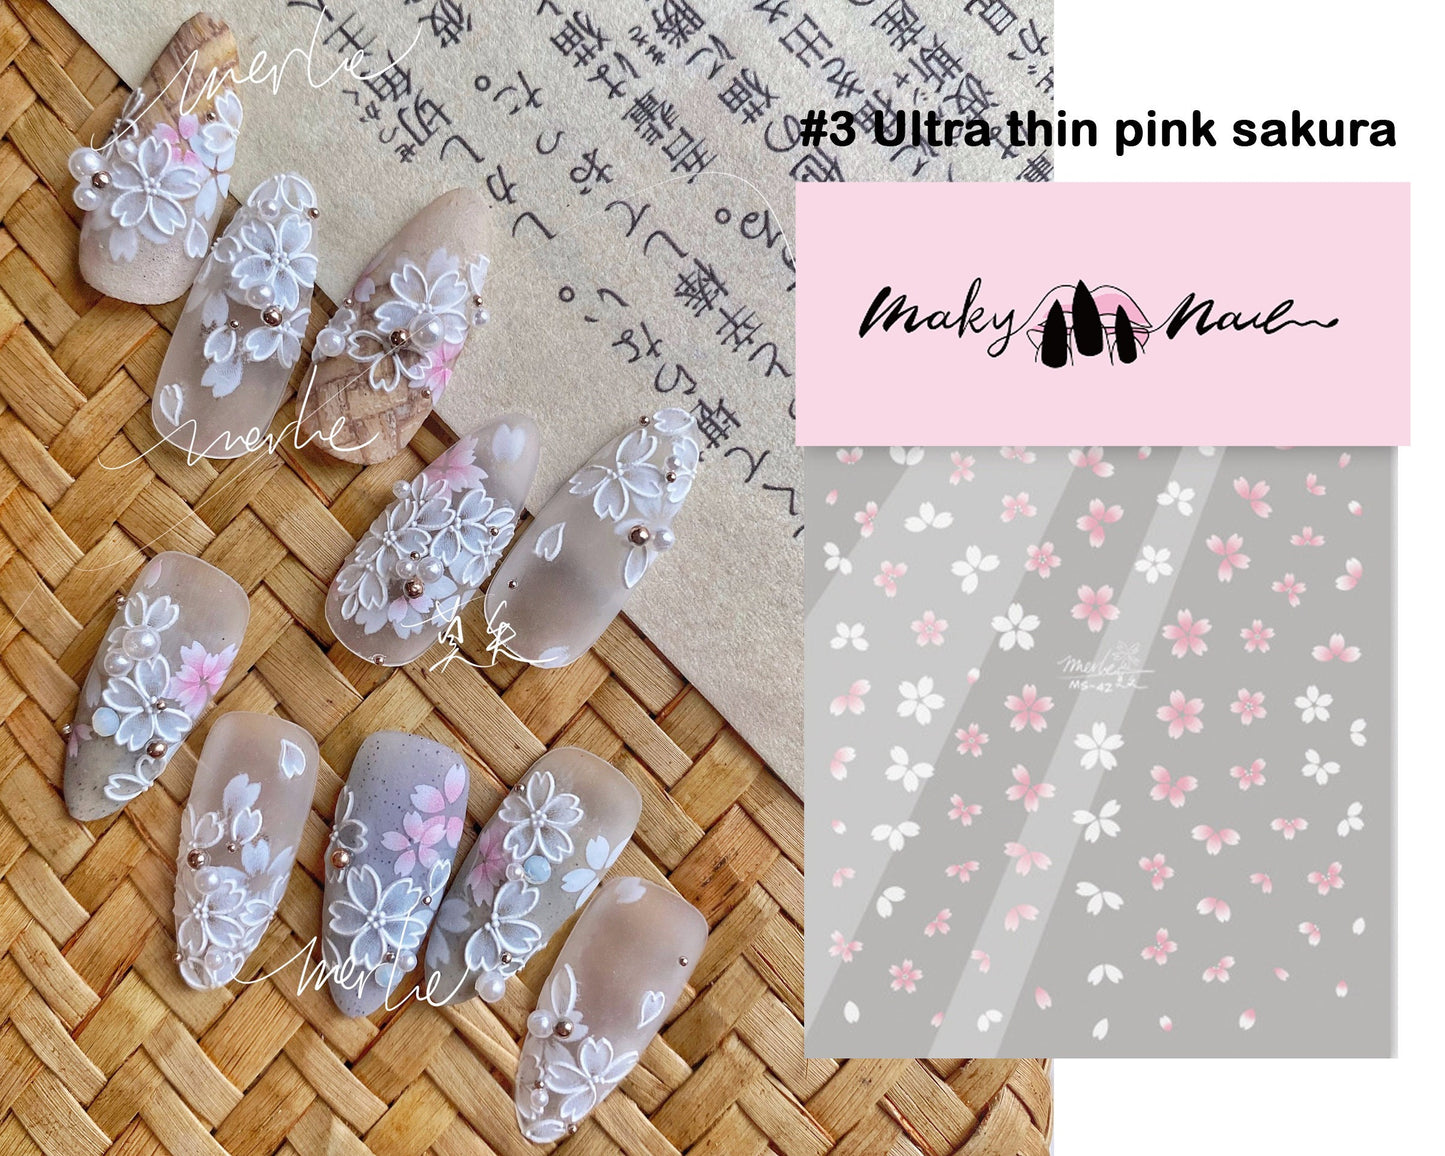 Oriental Cherry Blossom Nail Art Sticker/ DIY Tips Guides Transfer Stickers/ Pink sakura flower Sticker/ plum blossom manicure stencil